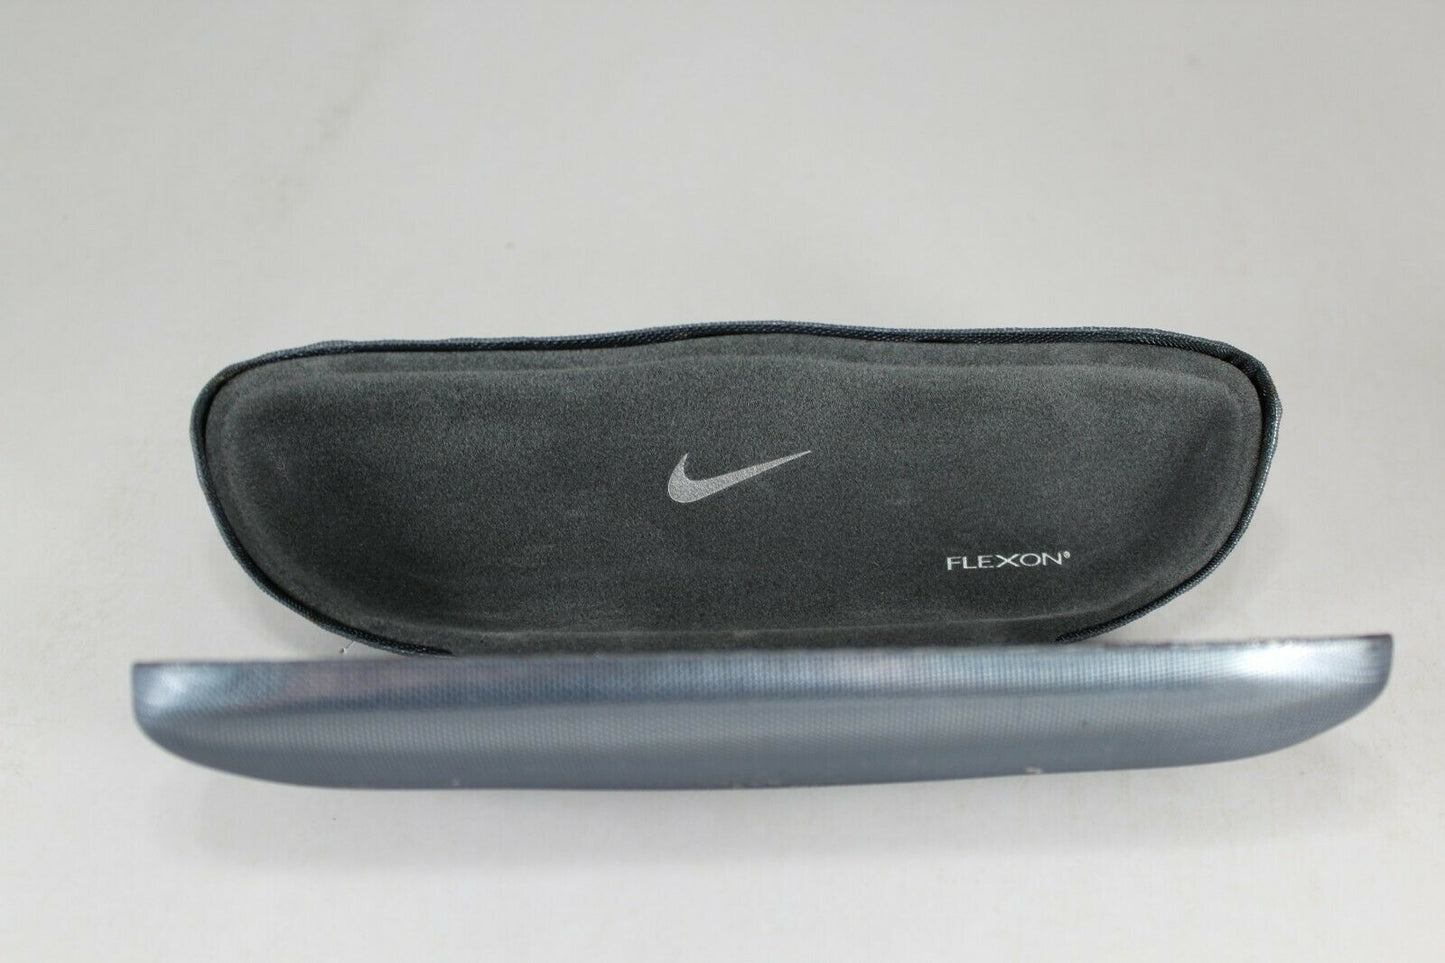 Nike NIKE 7124-001 50mm New Eyeglasses